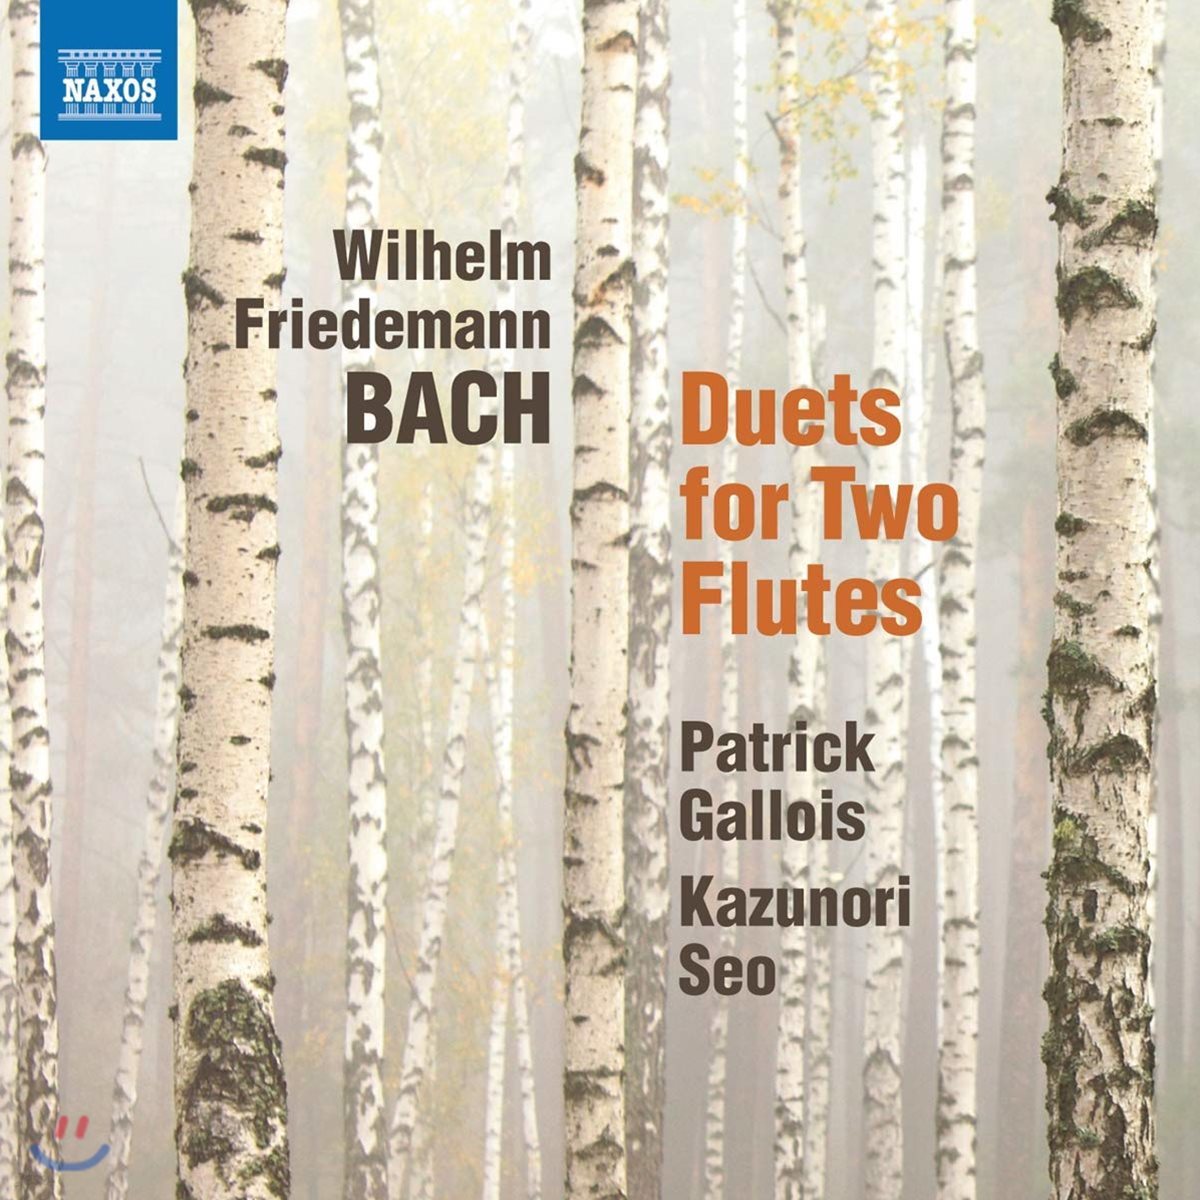 Patrick Gallois 빌헬름 프리데만 바흐: 두 대의 플루트를 위한 6개의 이중주 (W.F. Bach: Duets for Two Flutes)